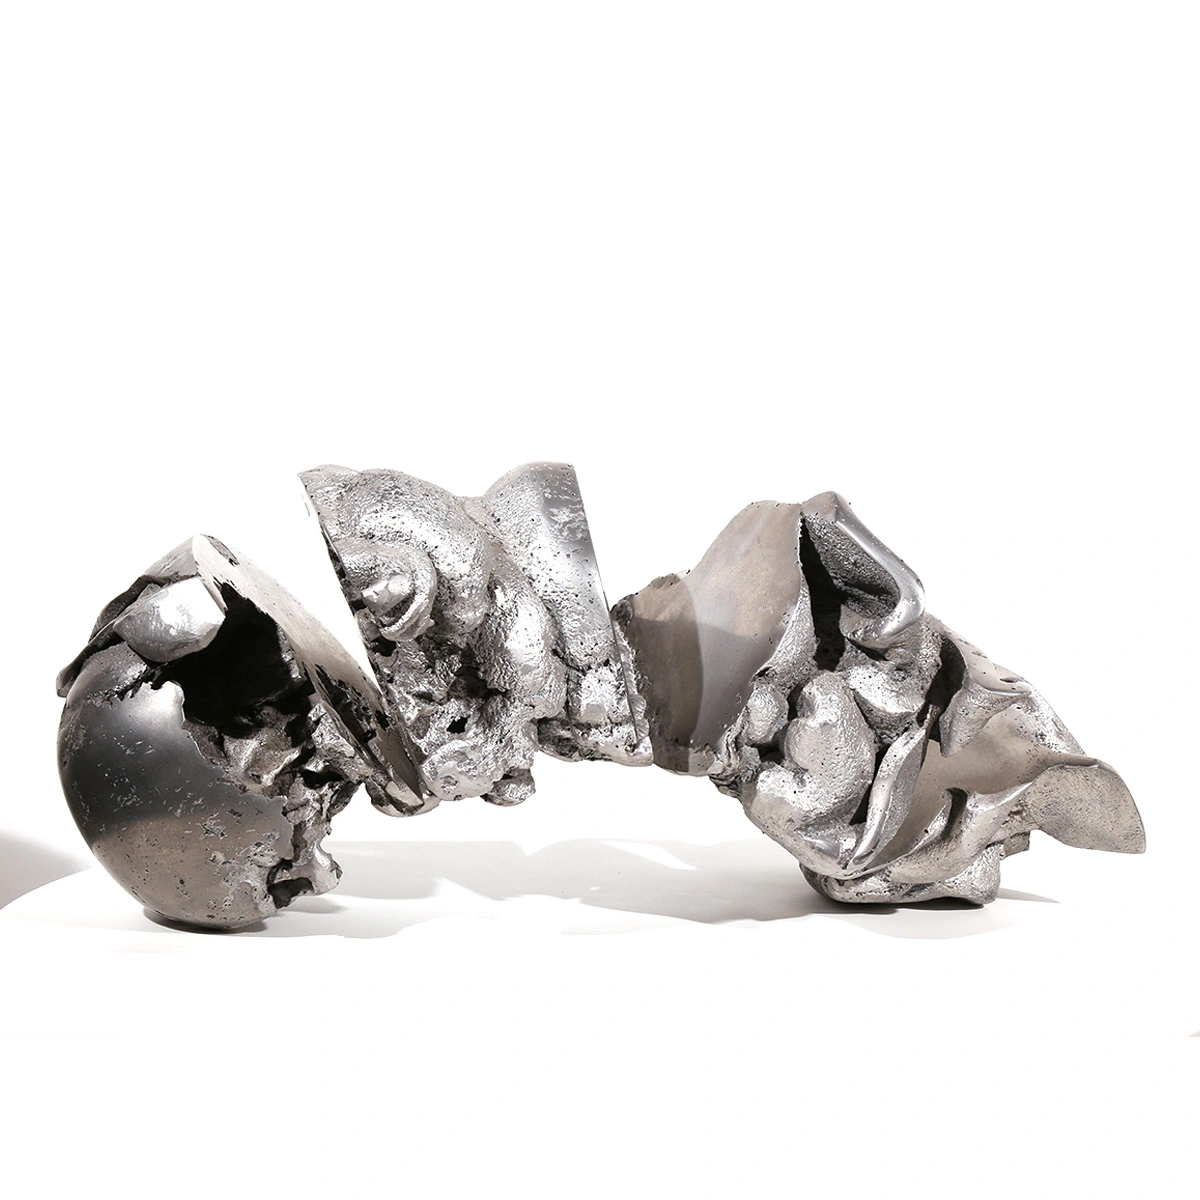 Female Knot | aluminum | 9 x 21 x 11 inches -Knot- Pure -Knots- Sand-casted -aluminum -sculpture -by -Mel -Hantz